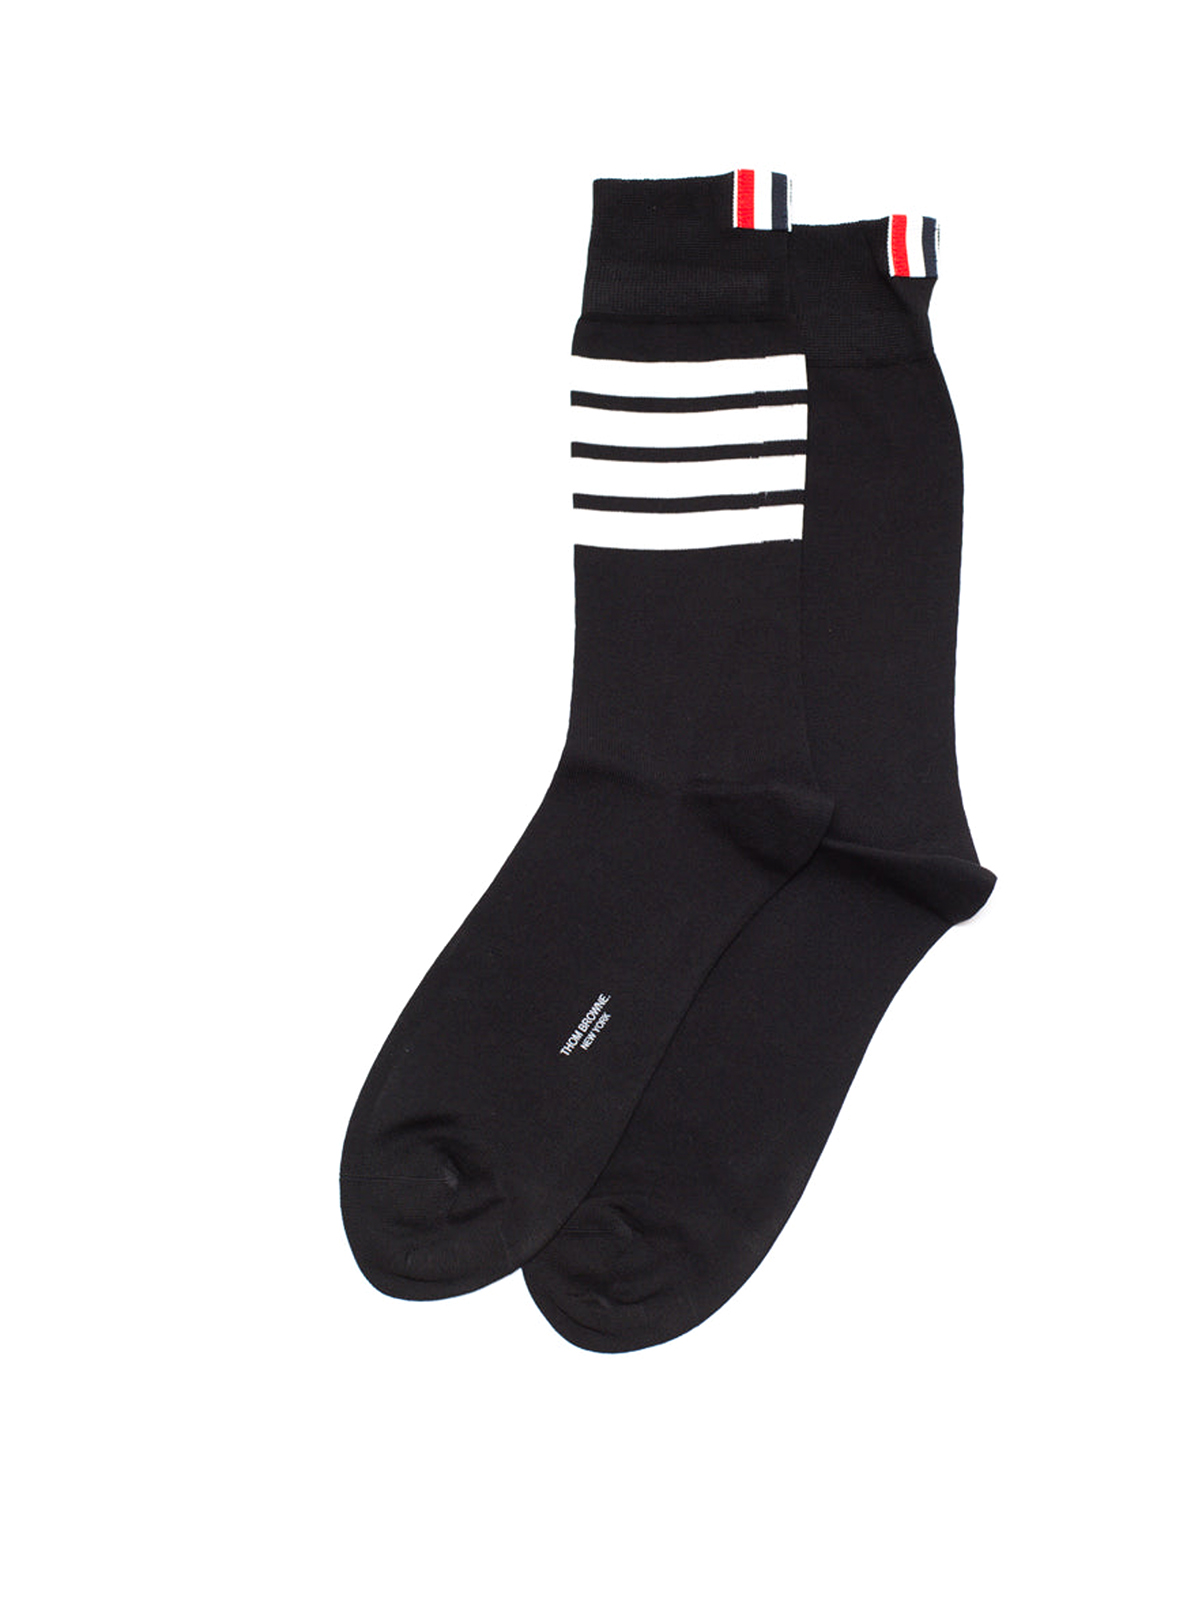 Thom Browne Black Cotton Socks With Four Stripes